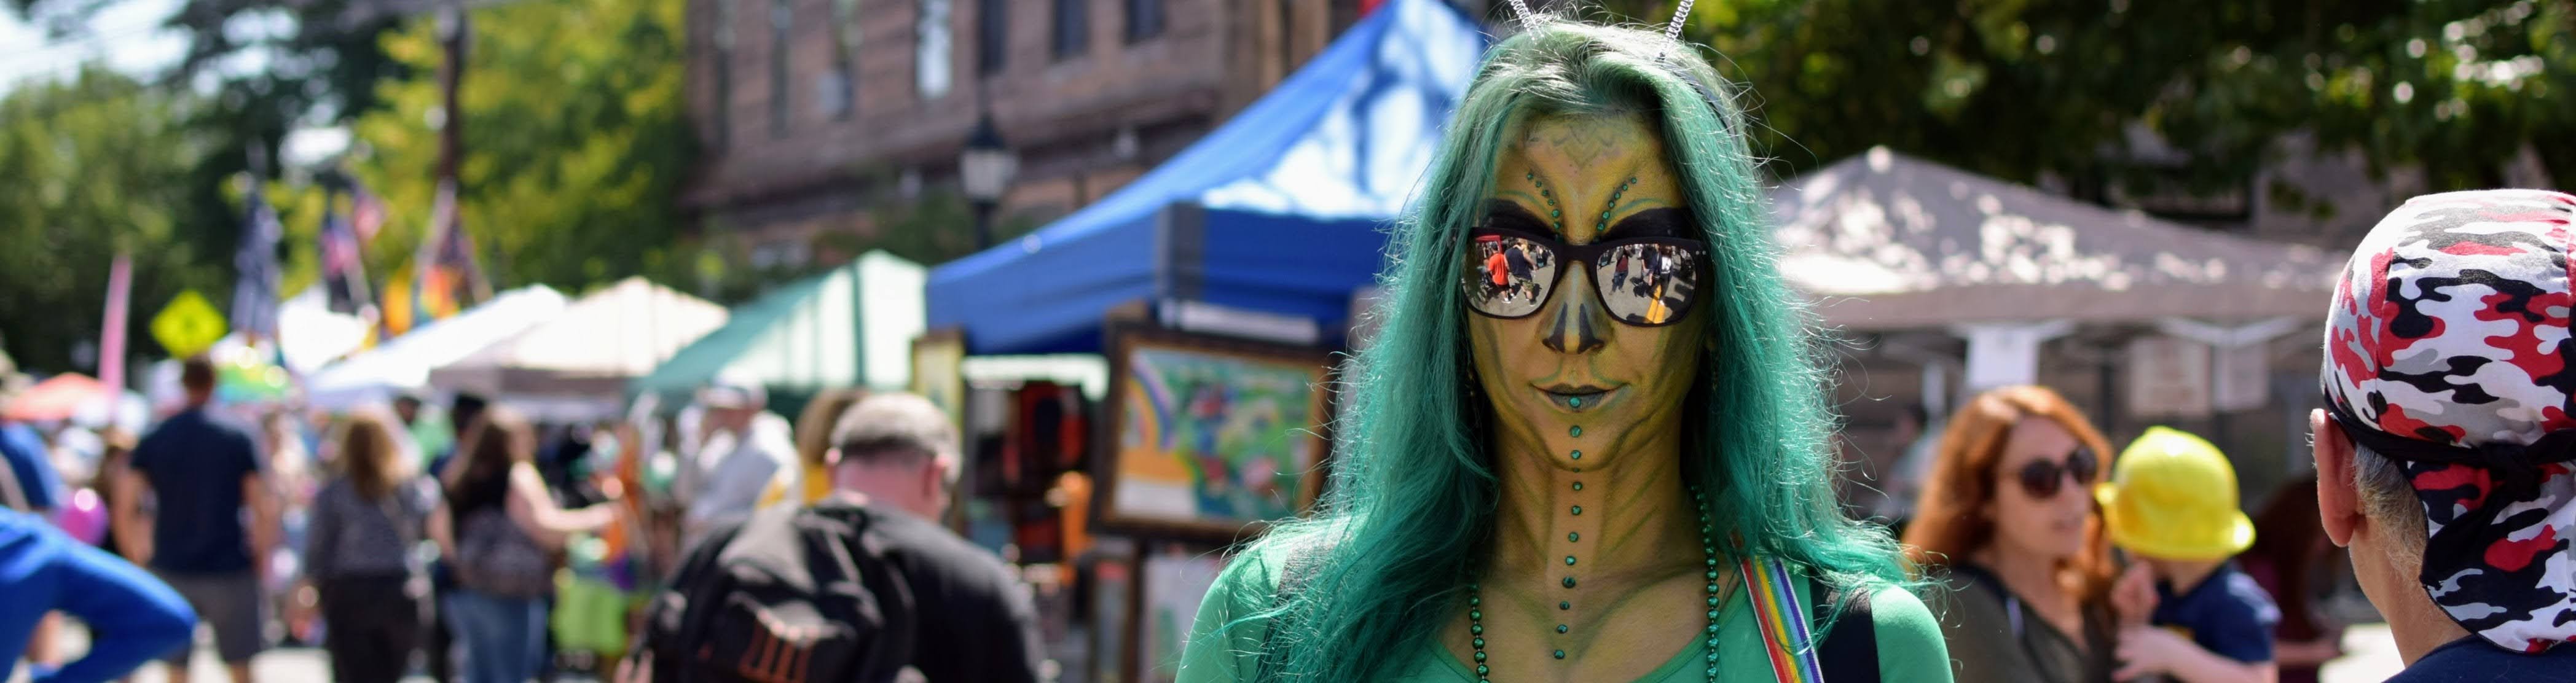 A woman in green alien makeup